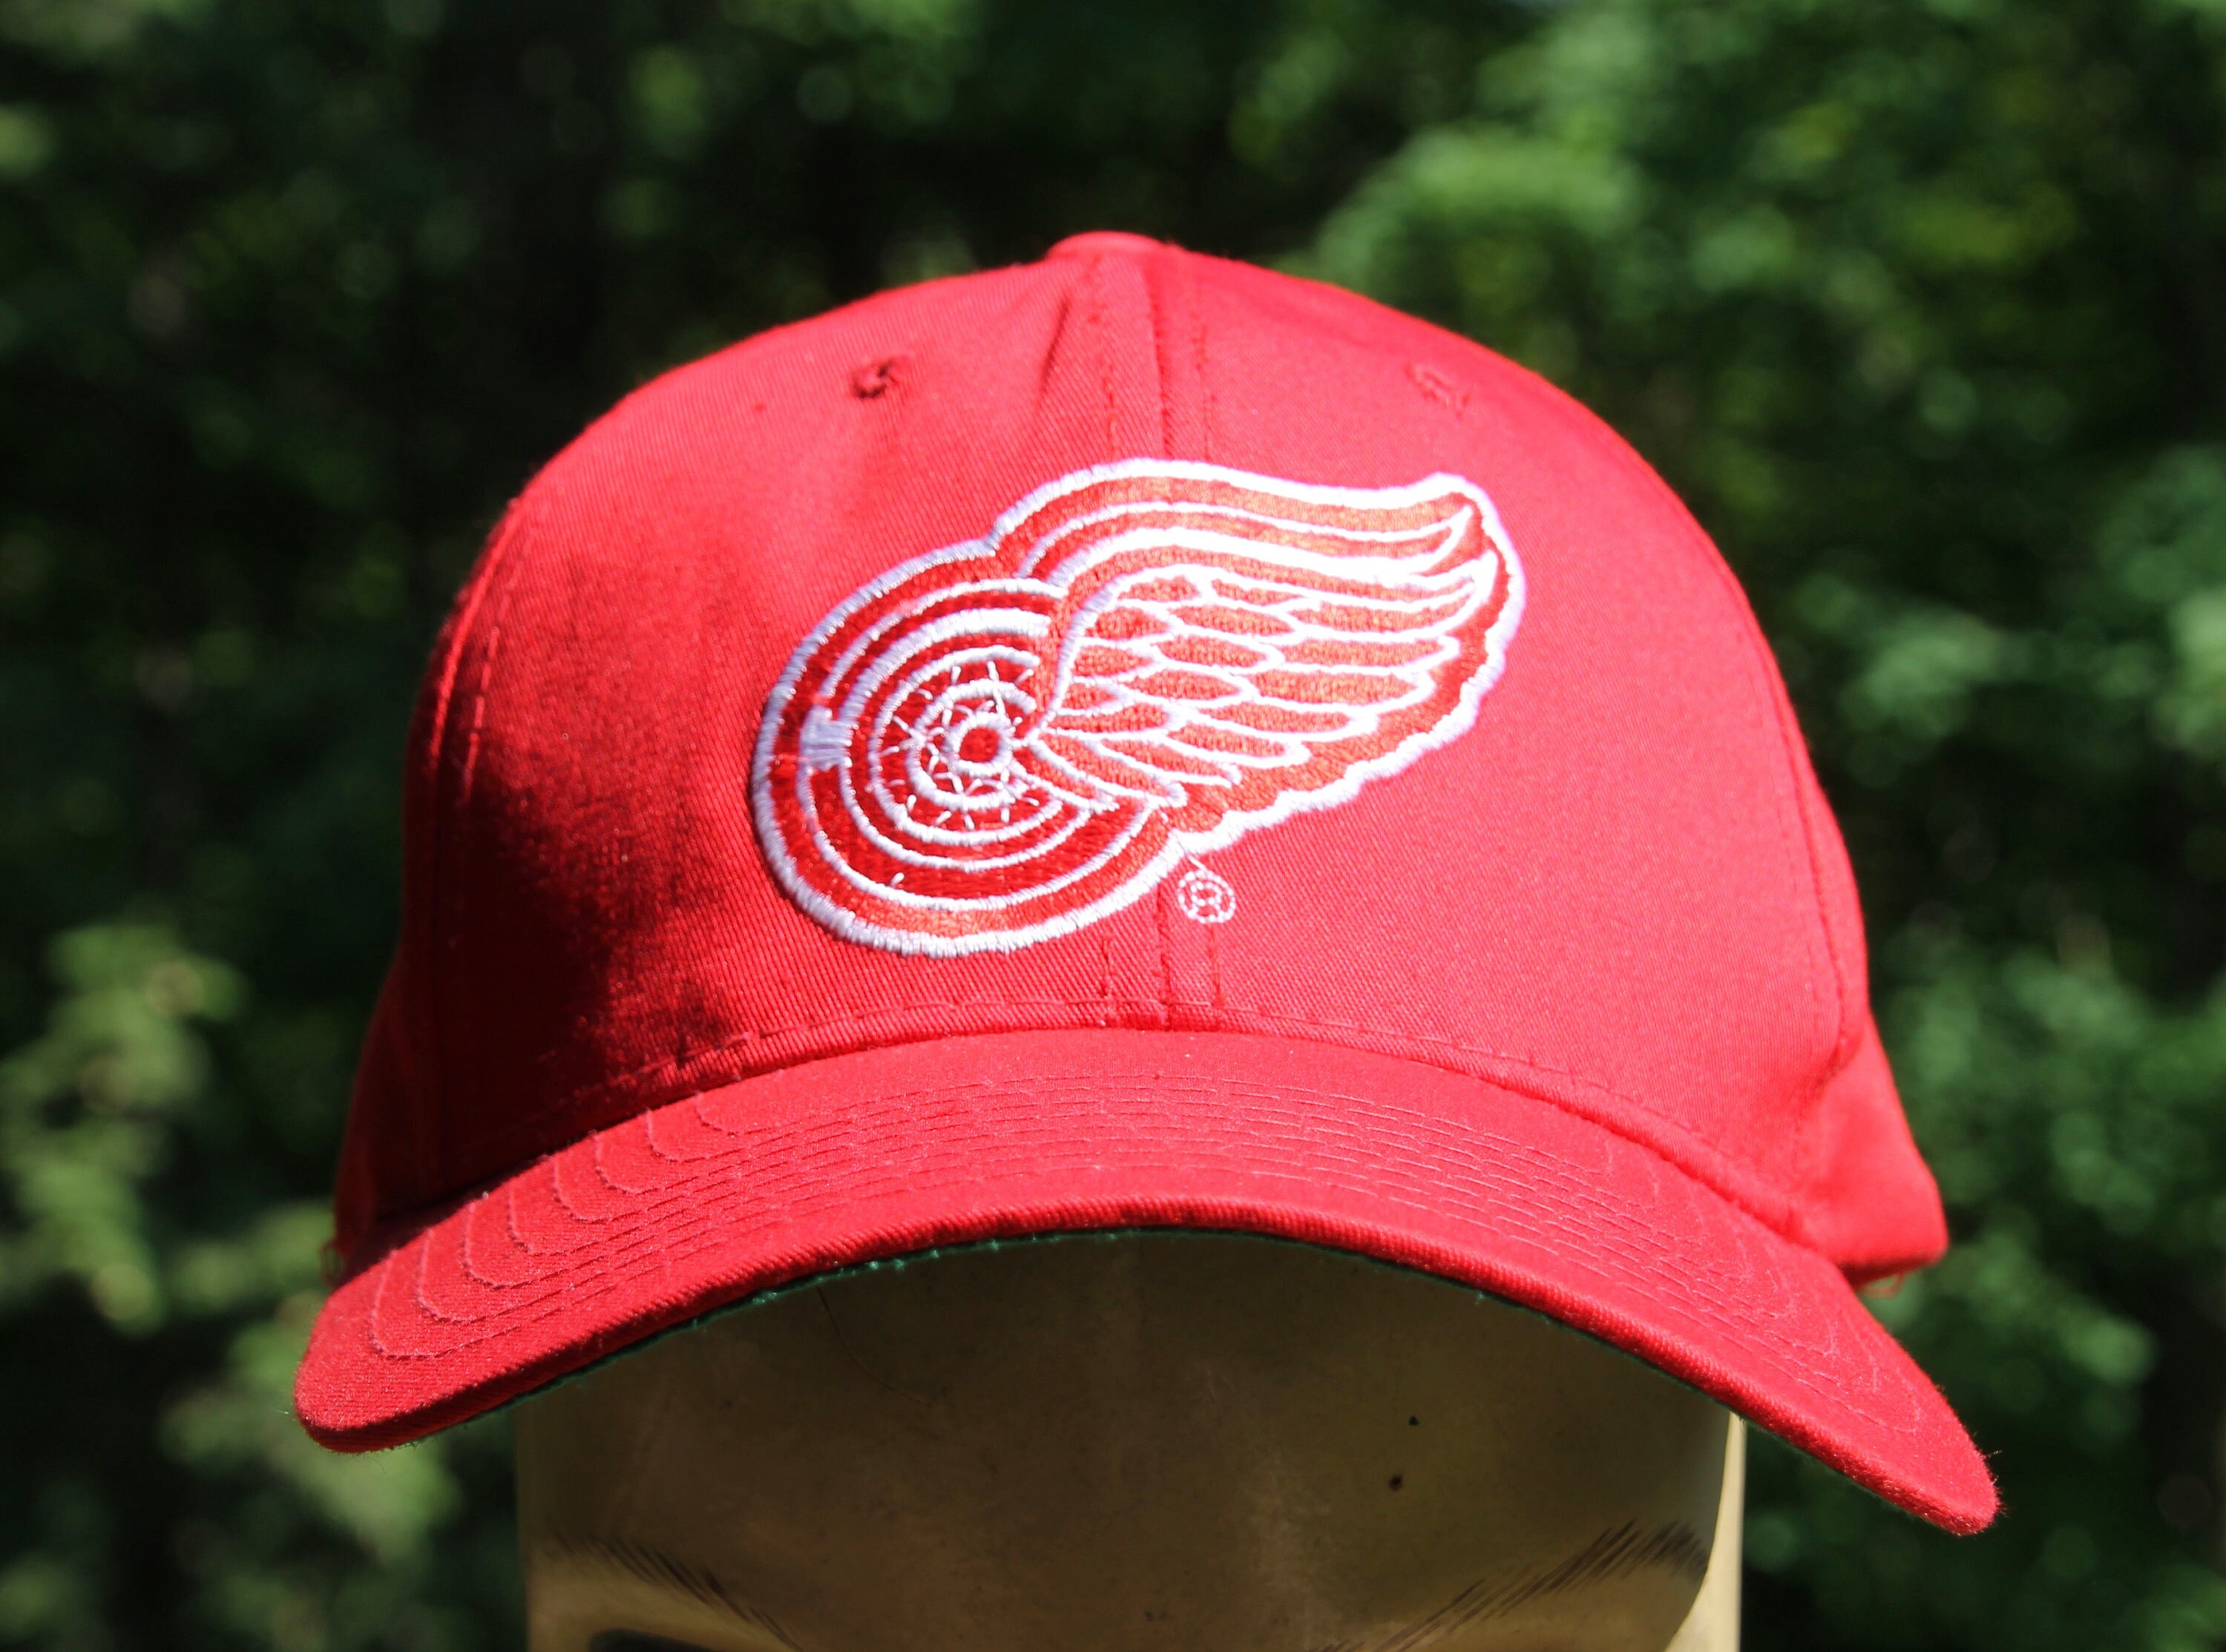  Detroit Red Wings Hat